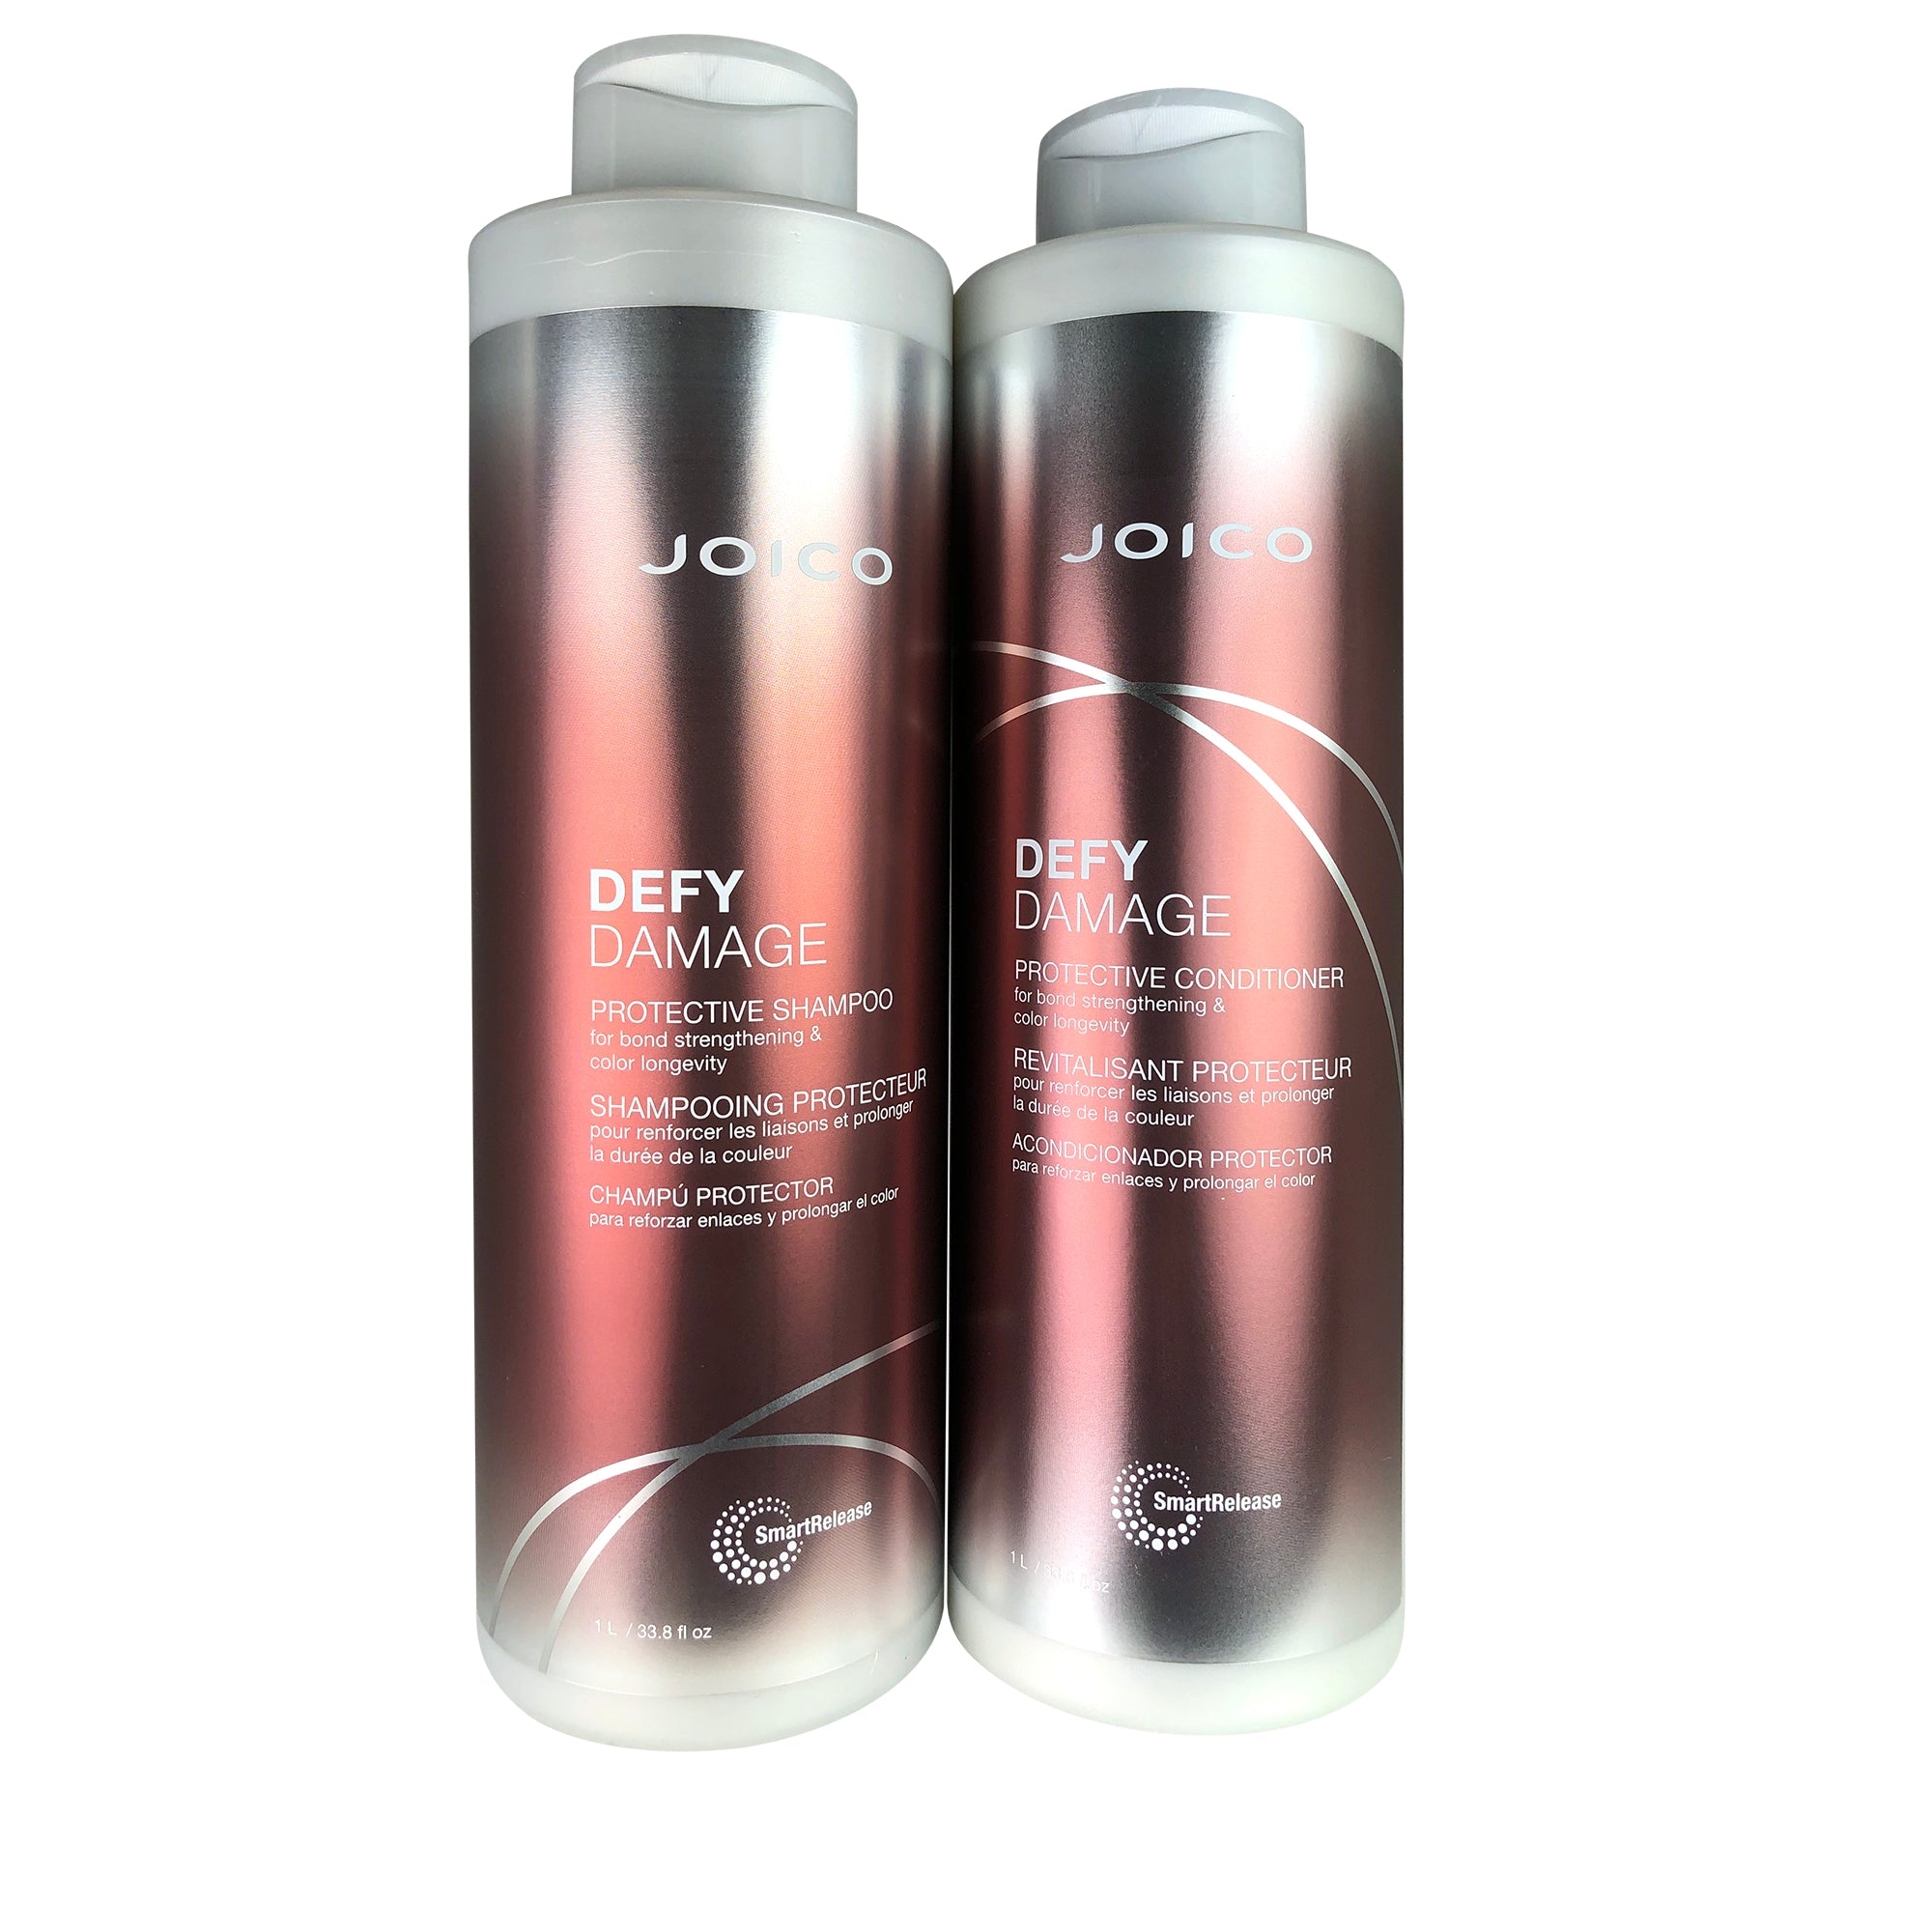 Joico Defy Damage Shampoo & Conditioner DUO Liter 33.8 oz